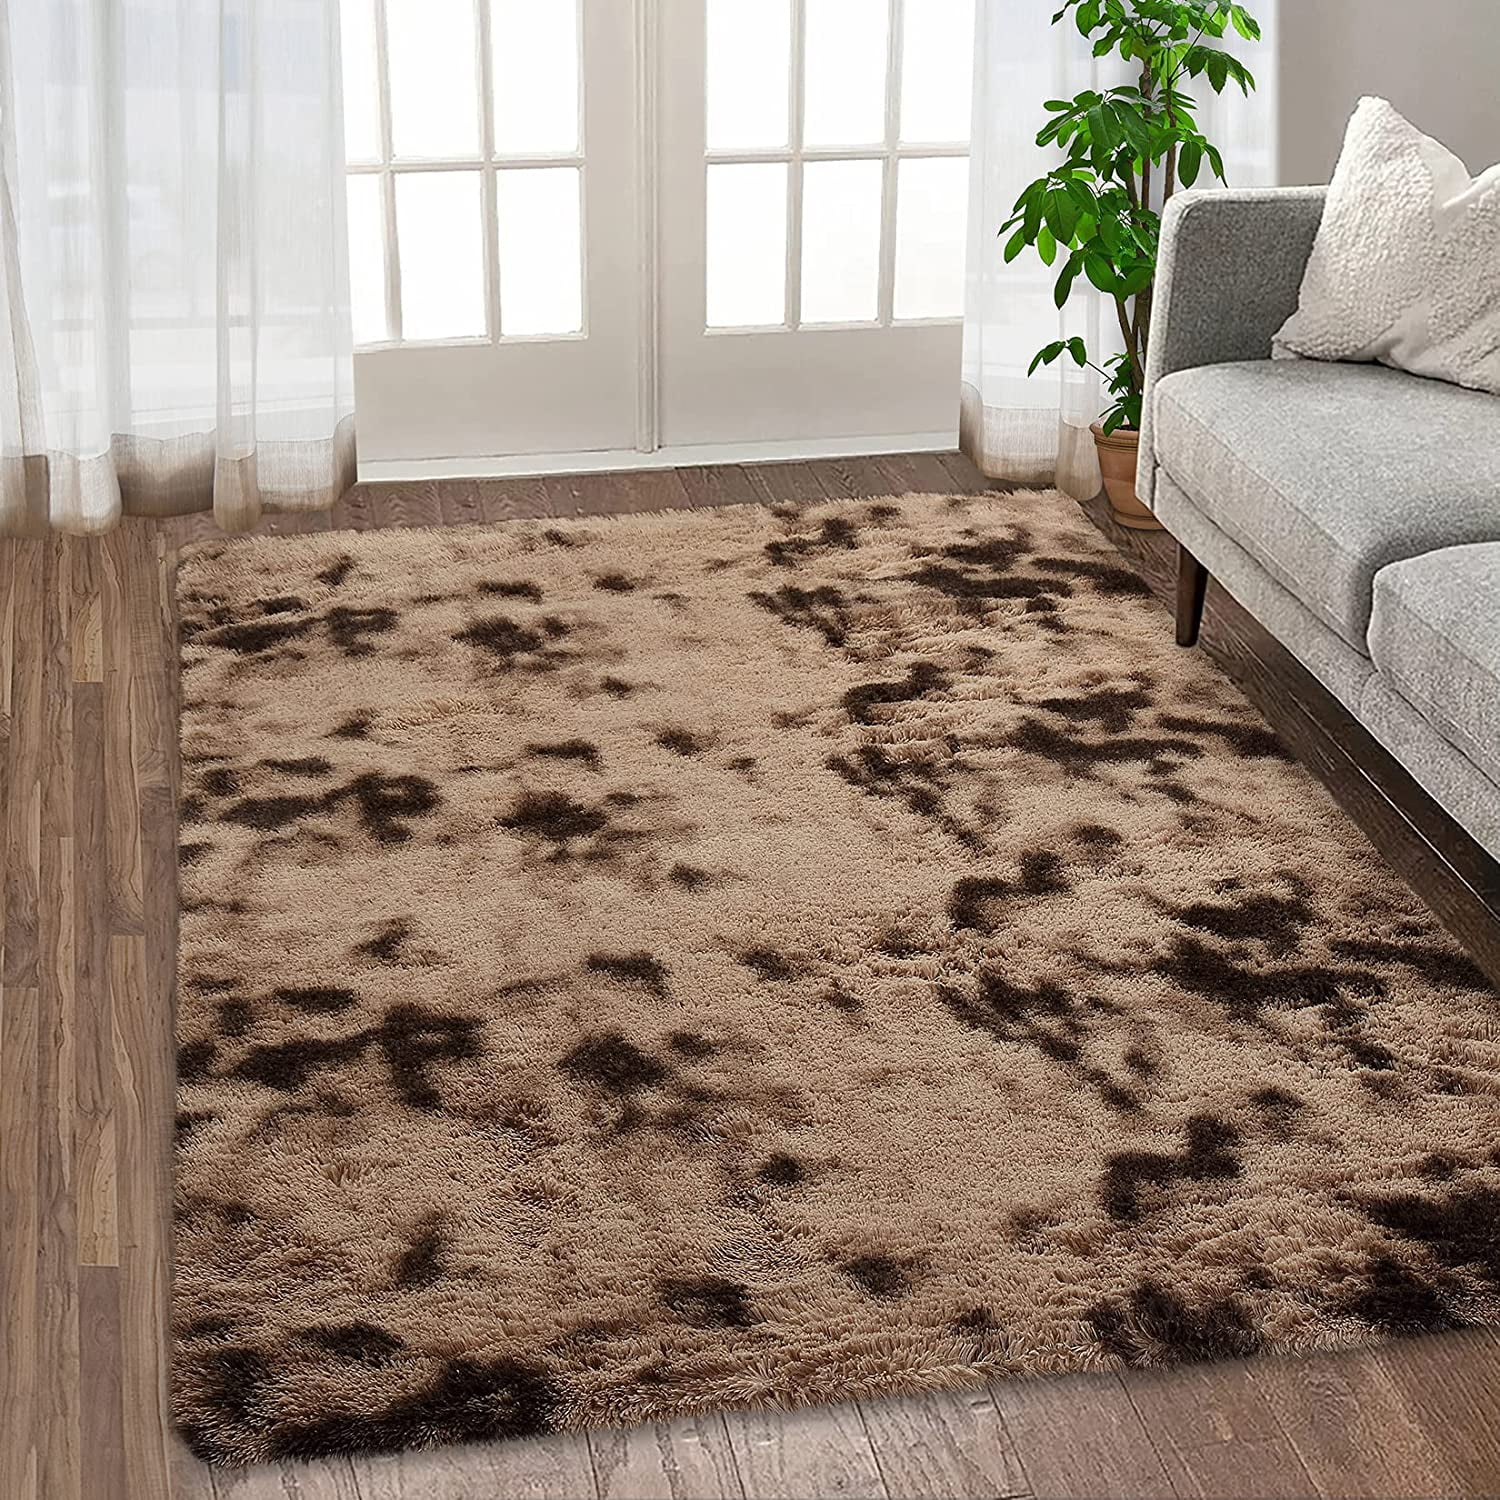 6.6ft Shaggy Area Rugs Fluffy Tie-Dye Soft Carpet Living Room Bedroom Floor 